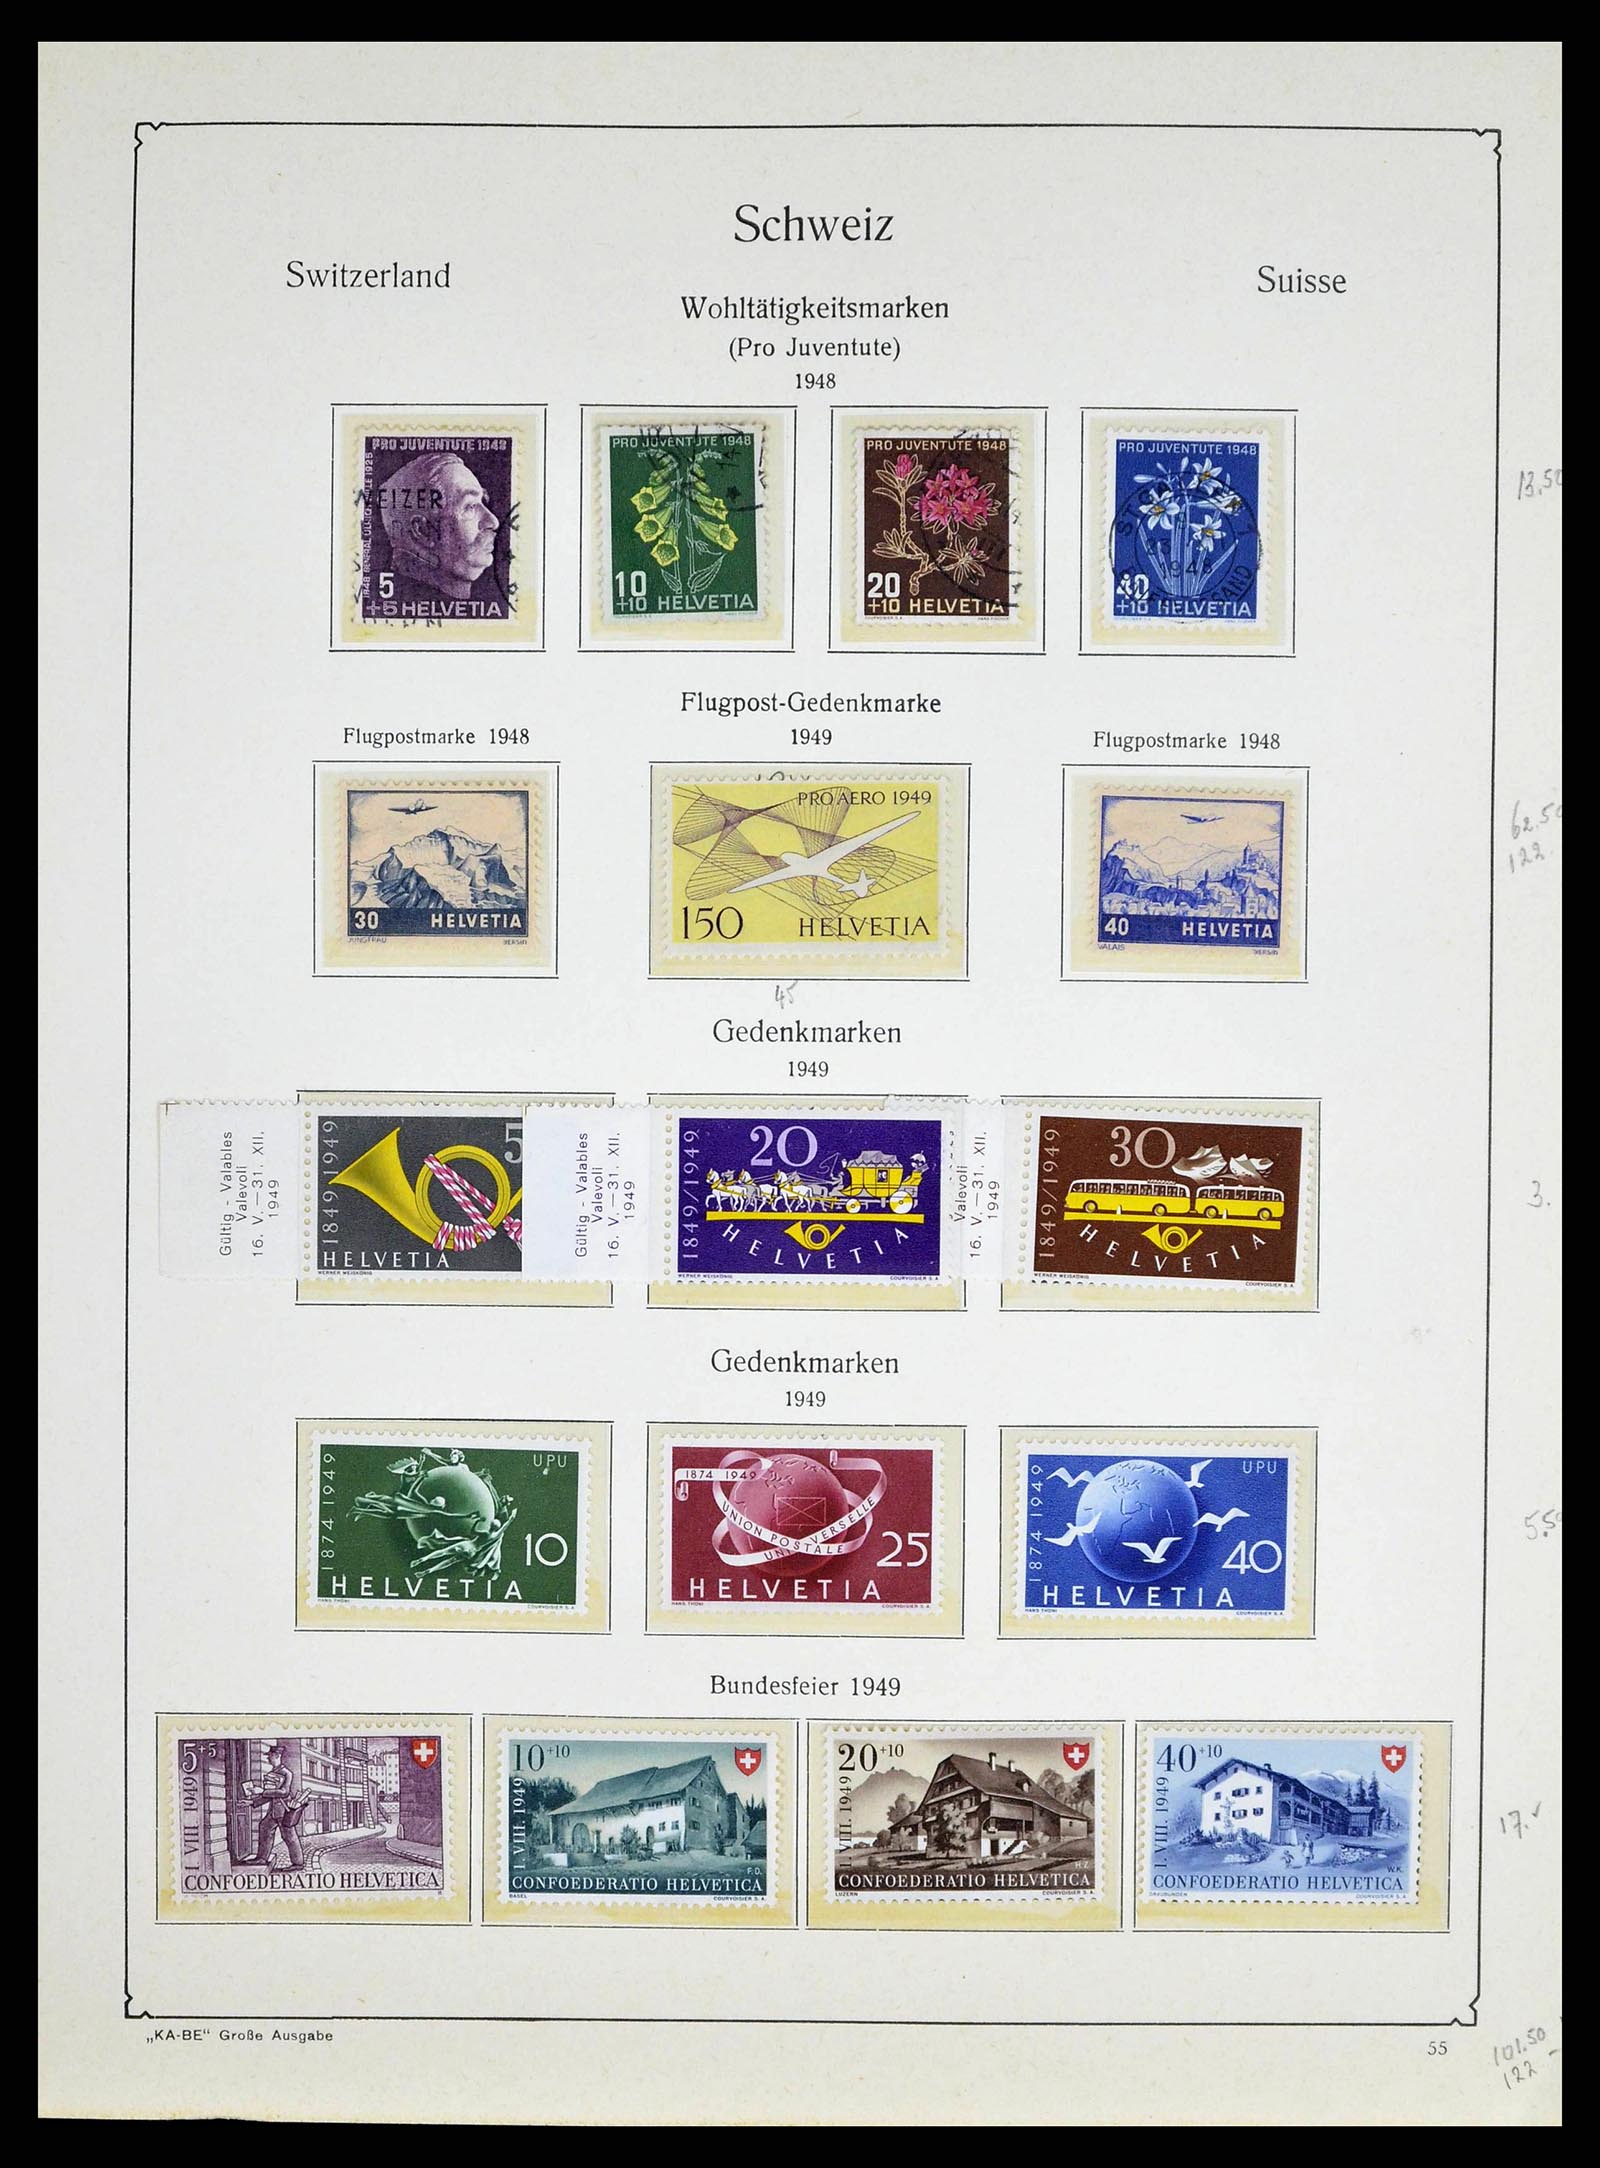 38706 0050 - Stamp collection 38706 Switzerland 1854-1985.